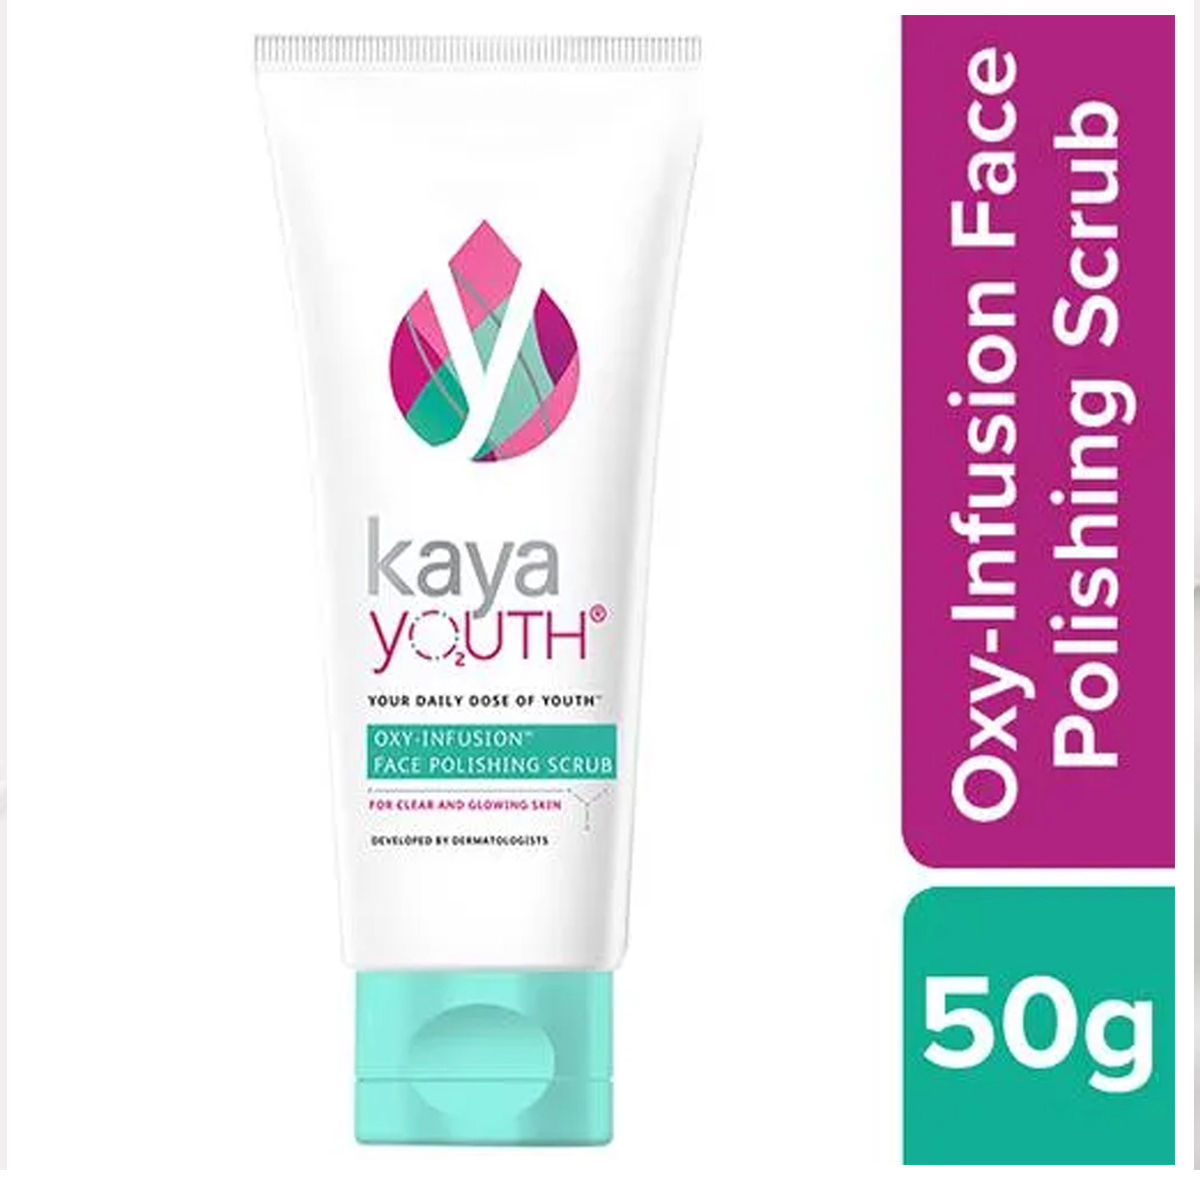 Buy Kaya Youth Oxy-Infusion Face Polishing Scrub, 50 gm Online